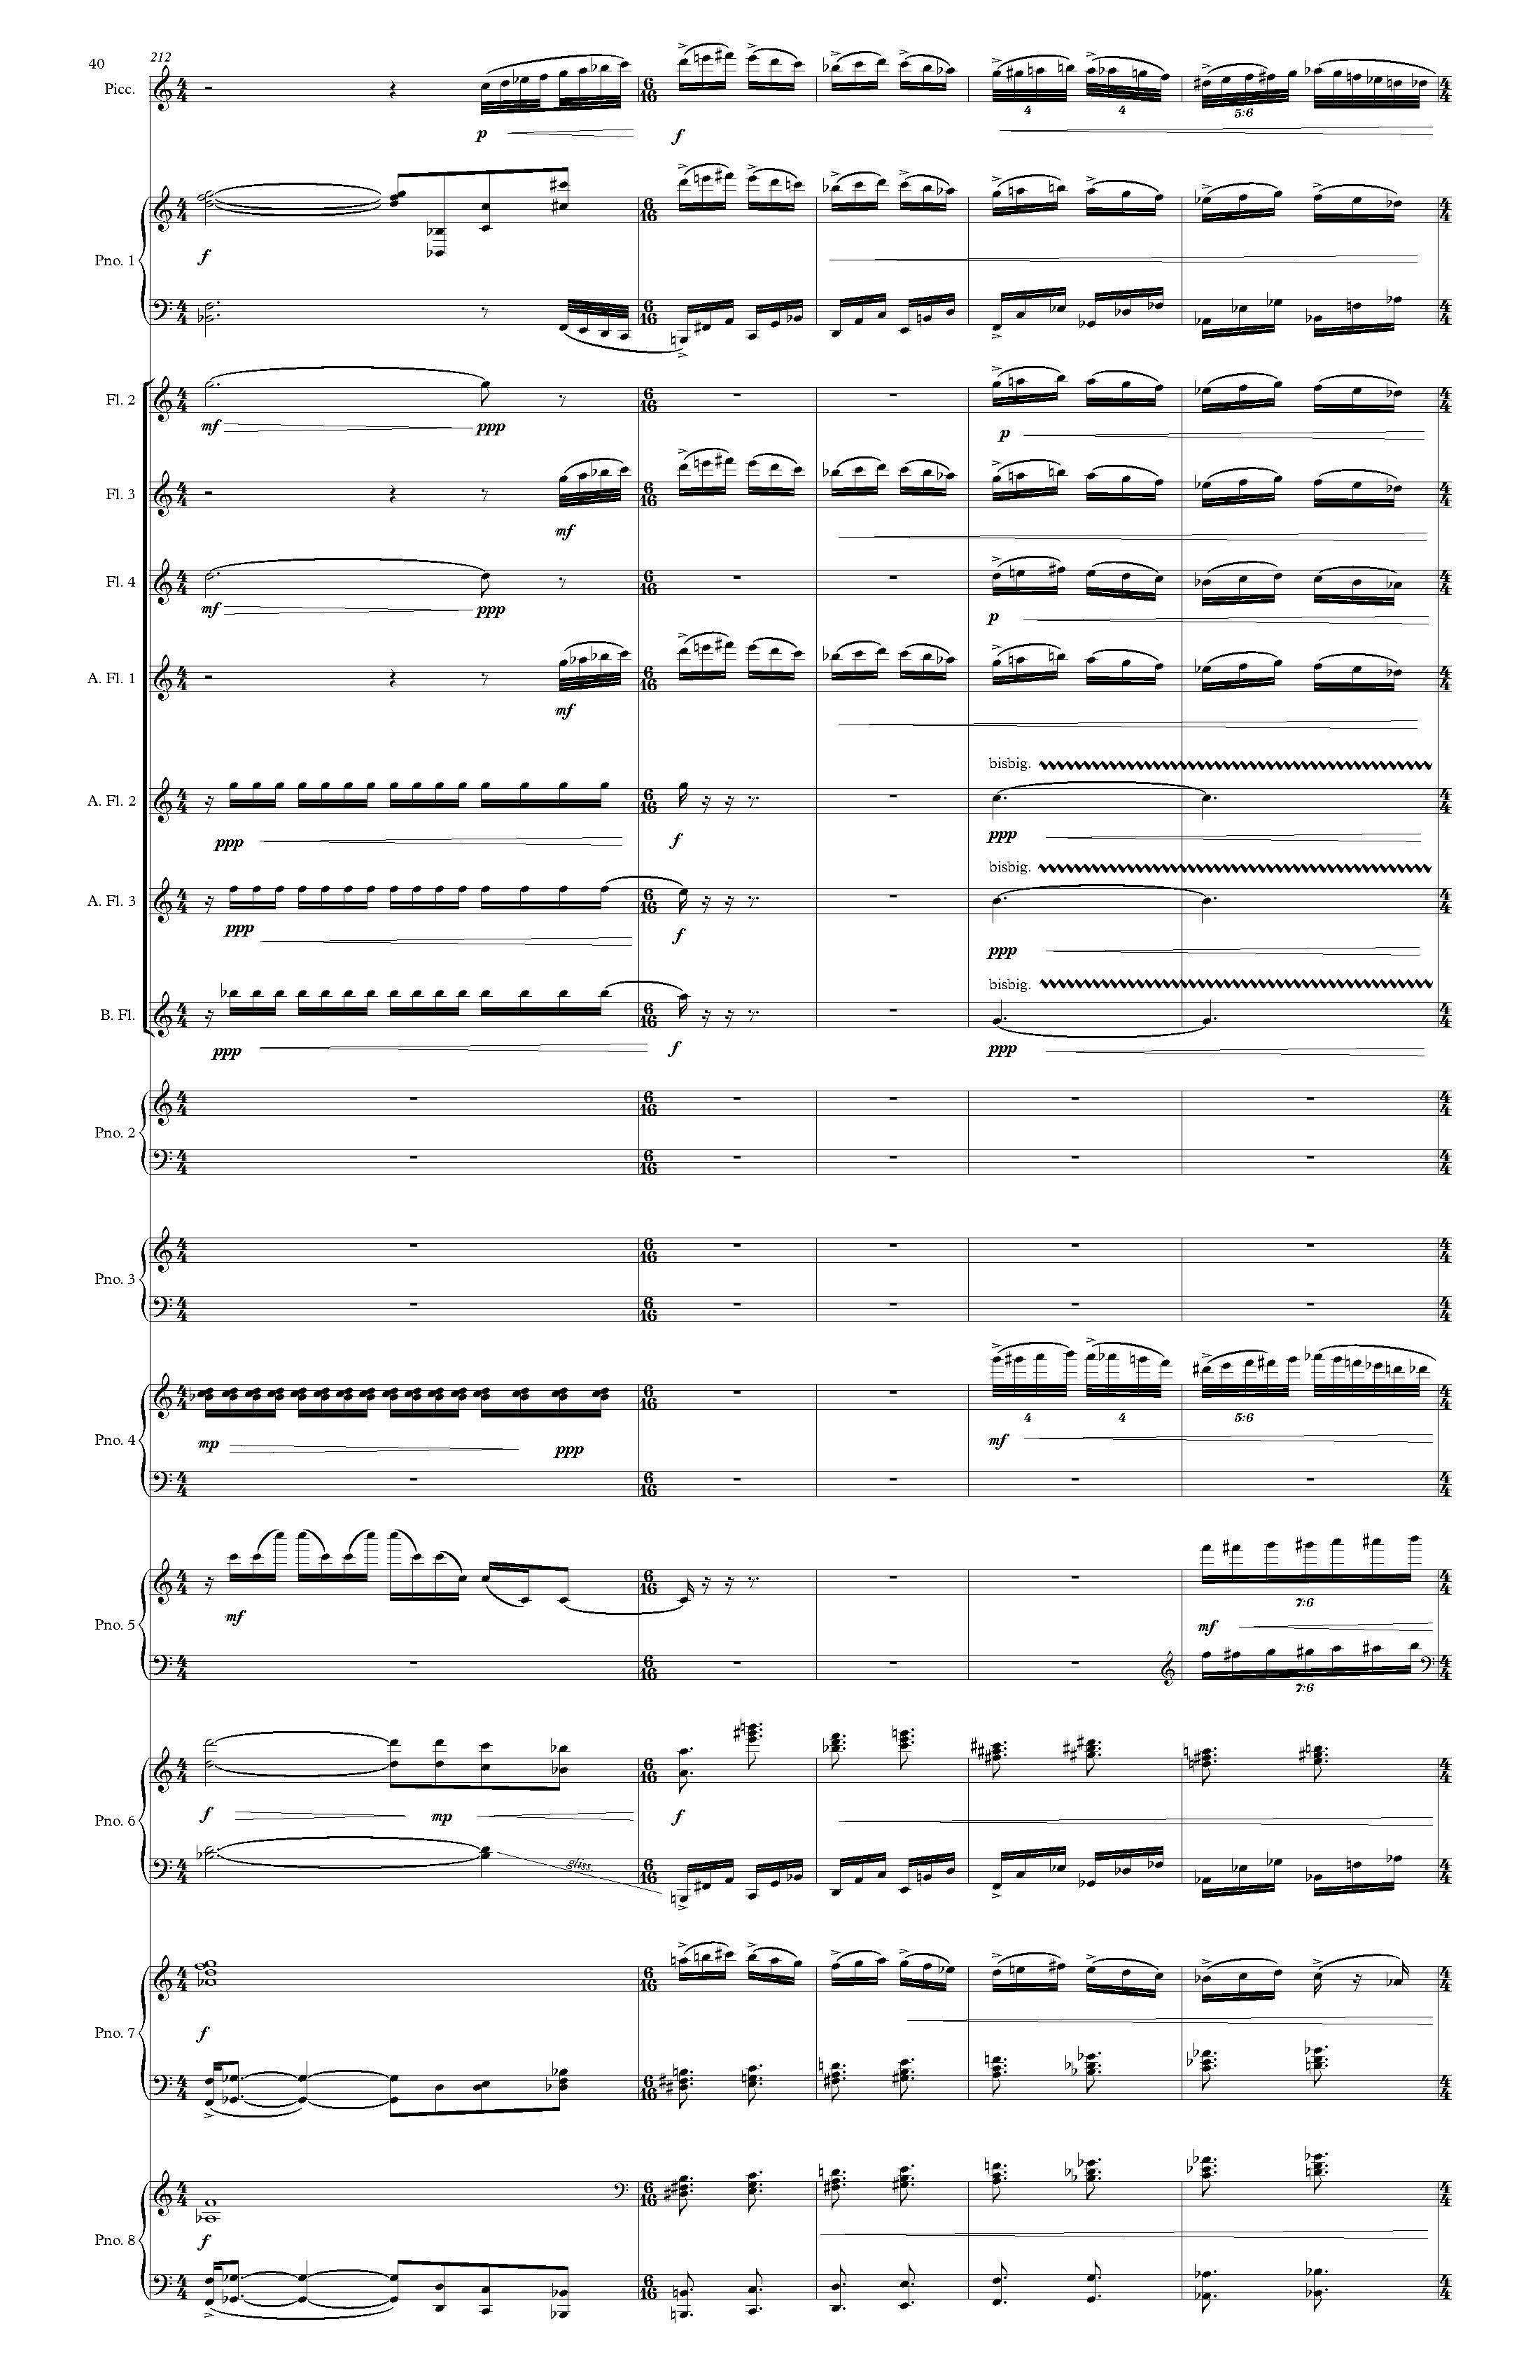 LEGION - Complete Score_Page_46.jpg